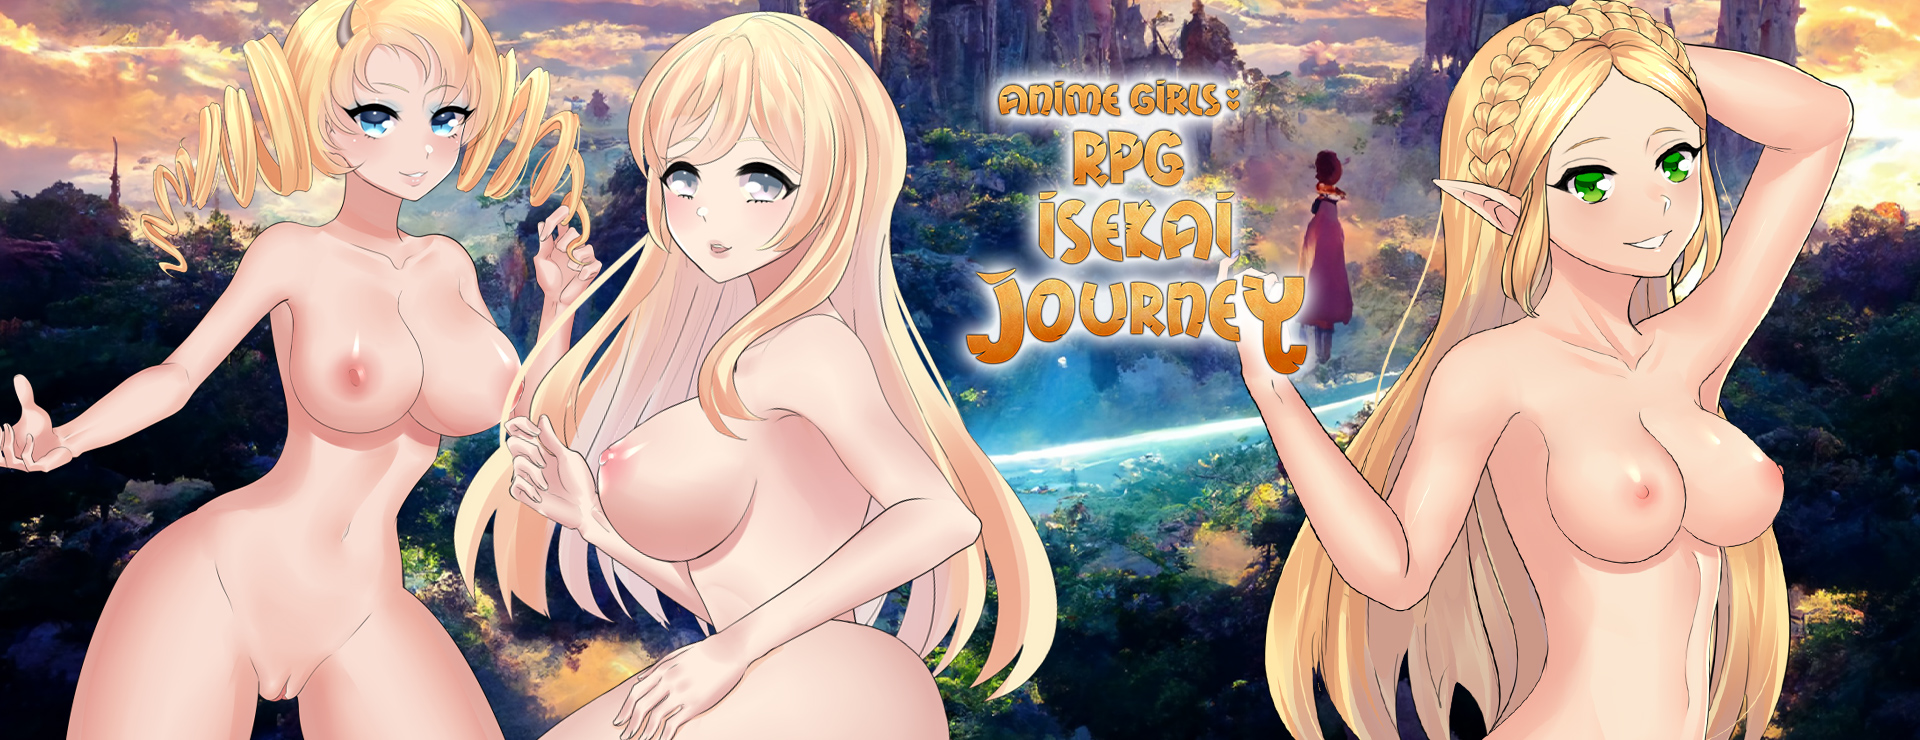 Anime RPG Isekai Journey - Action Adventure Game